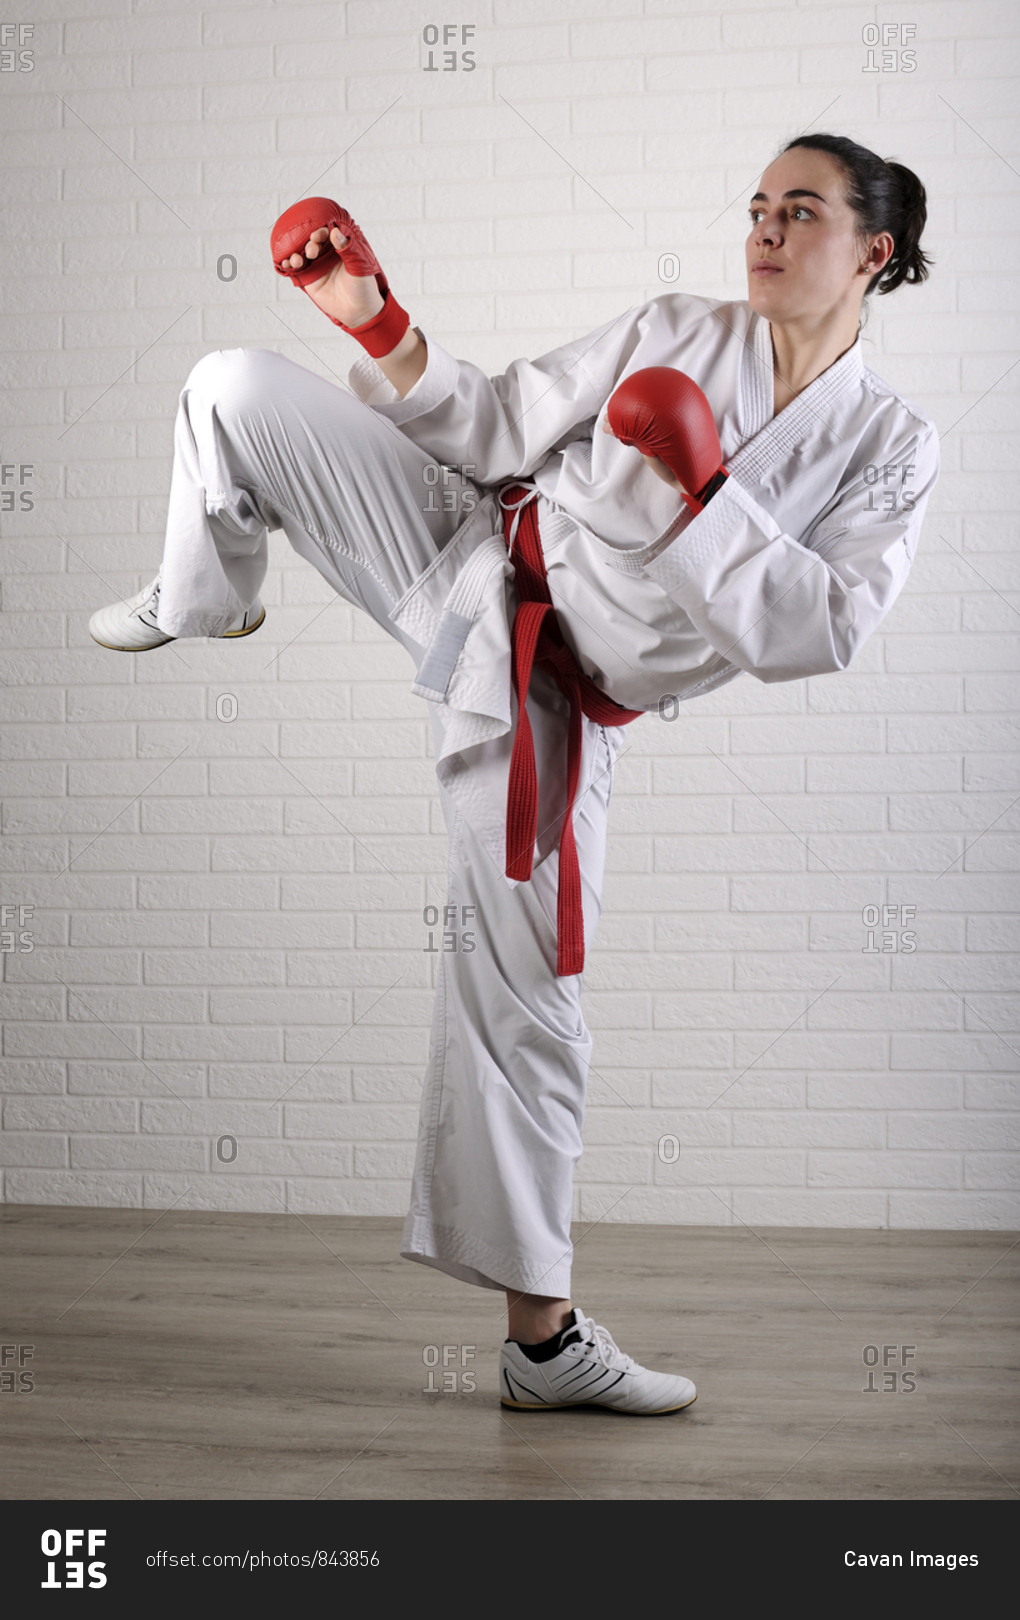 Full length of woman practicing karate against wall on hardwood floor